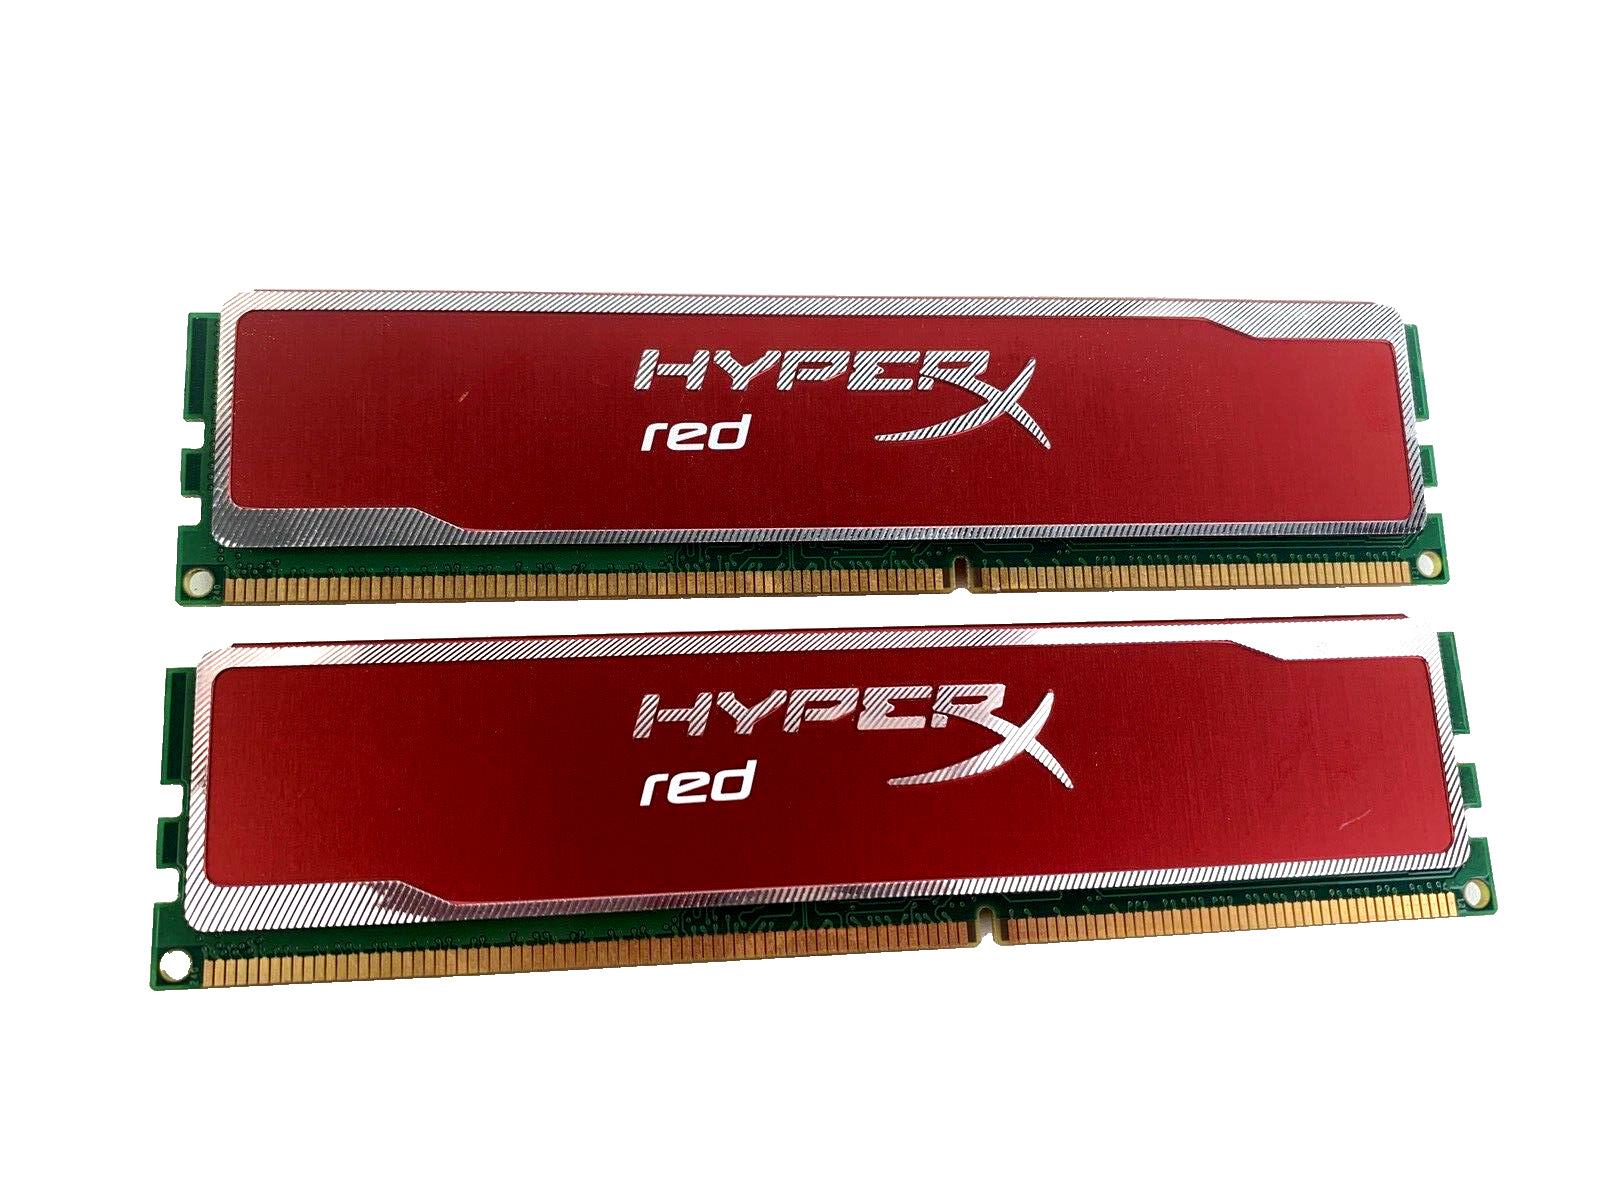 LOT OF 2 Kingston KHX16C9B1RK2/8X Hyper X Red 8GB (2x 4GB) DDR3 1.65V EVGA X58